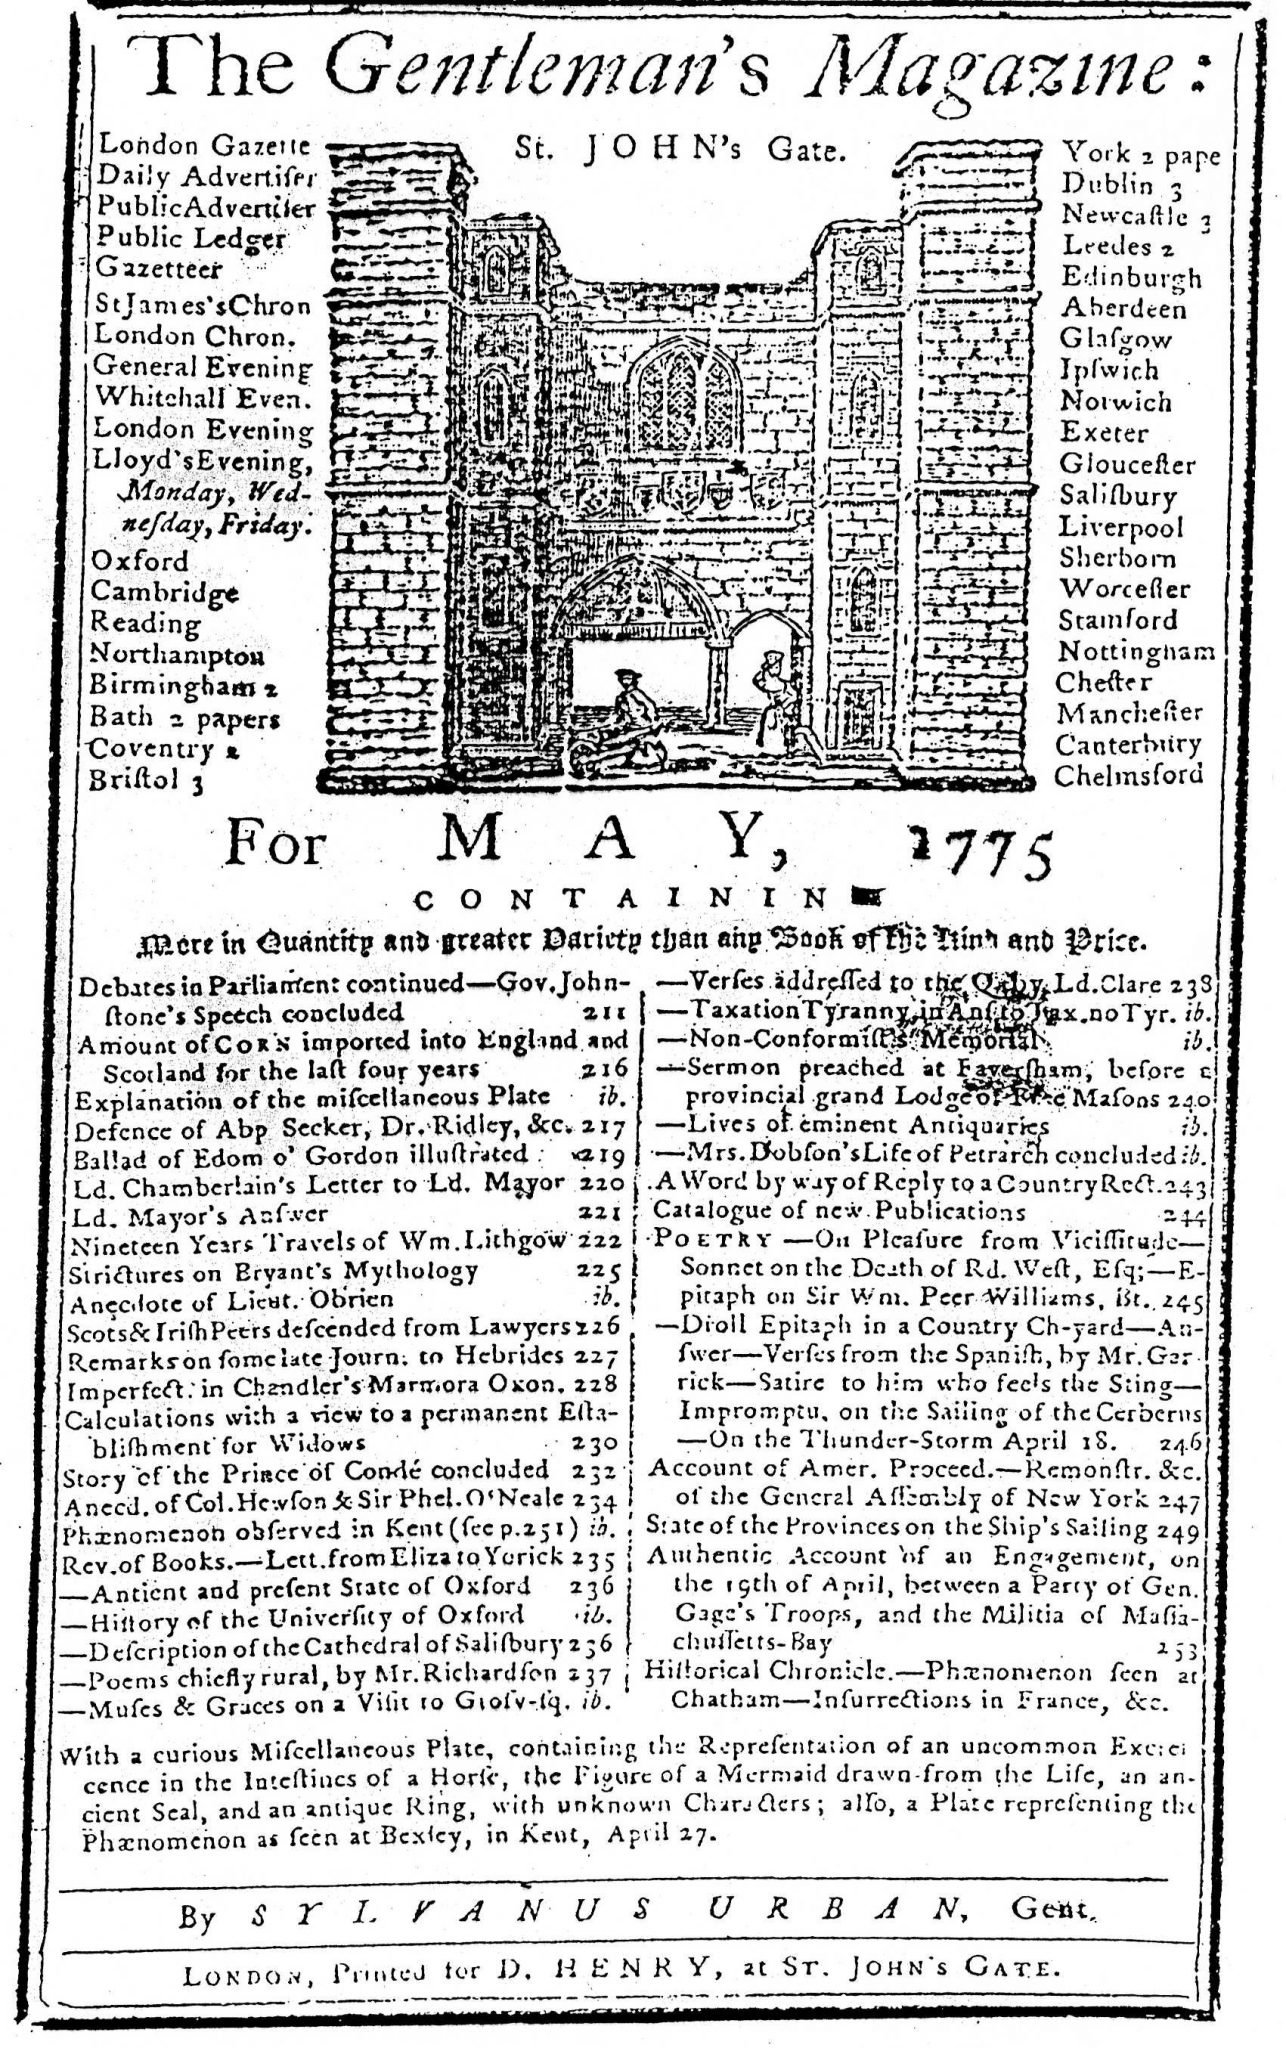 Gentleman's Magazine for May, 1775